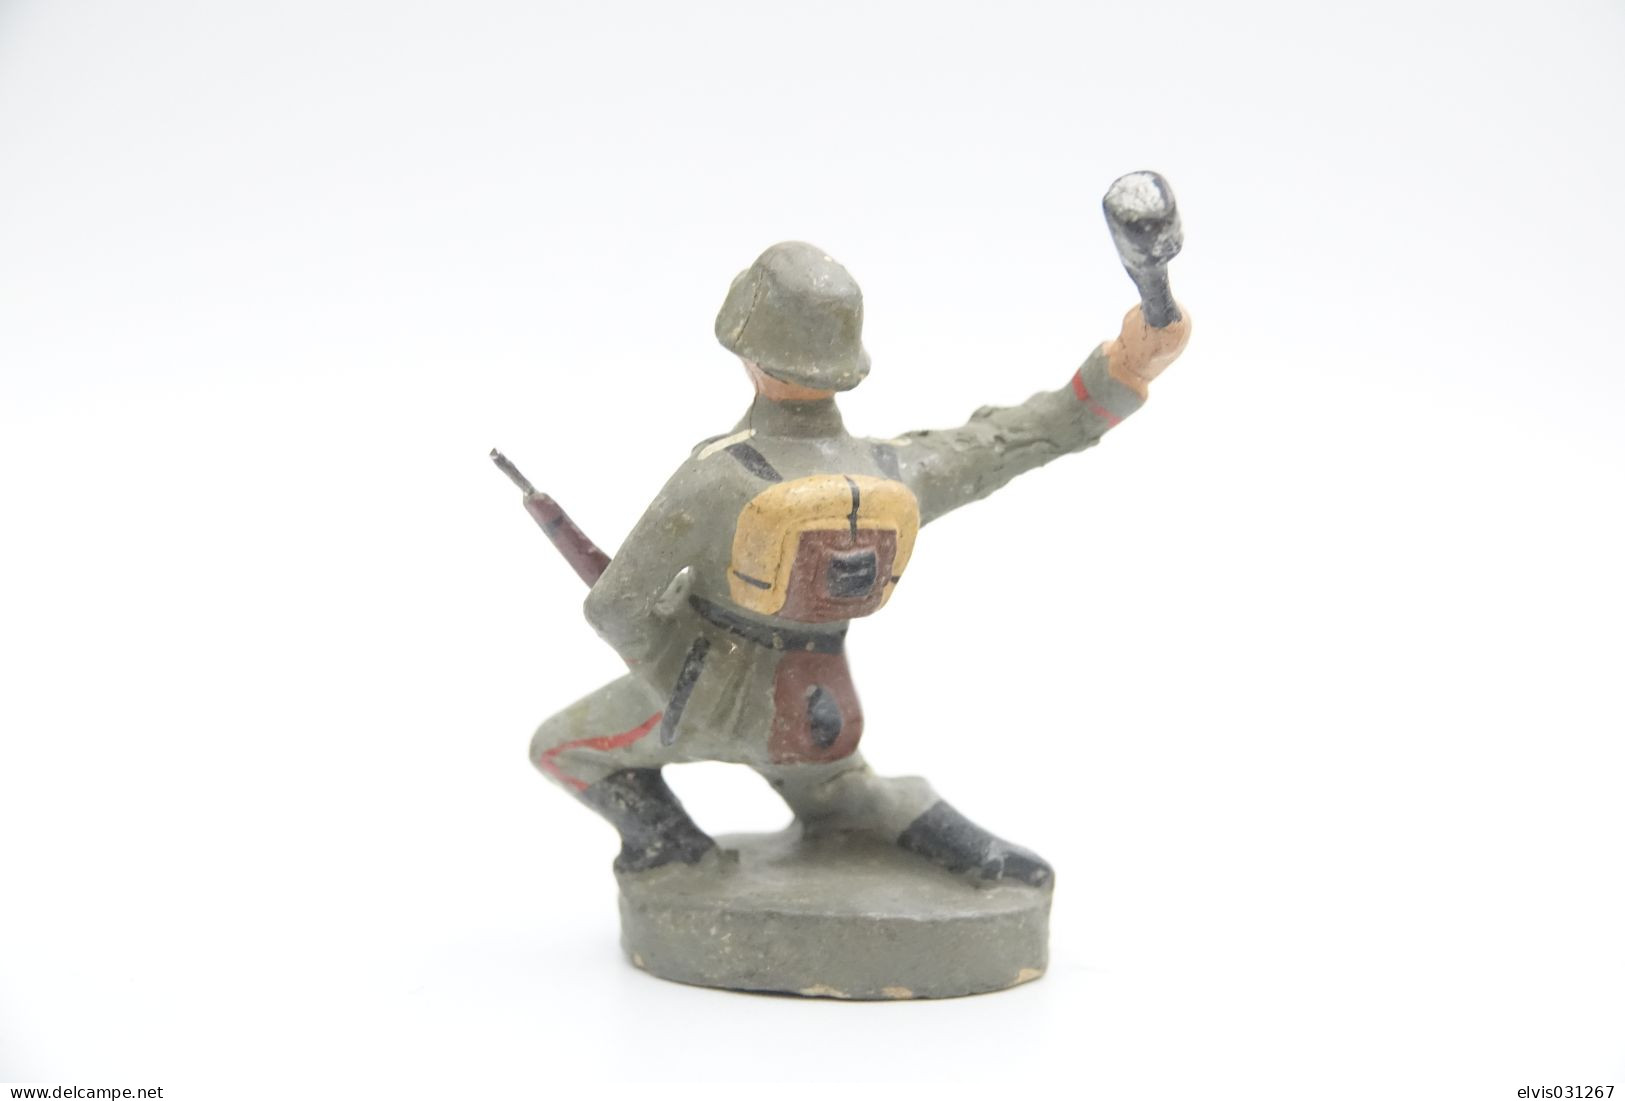 Lineol ? Germany, German With Grenade, Vintage Toy Soldier, Prewar - 1930's, Elastolin, Lineol Hauser, Durolin - Figurini & Soldatini